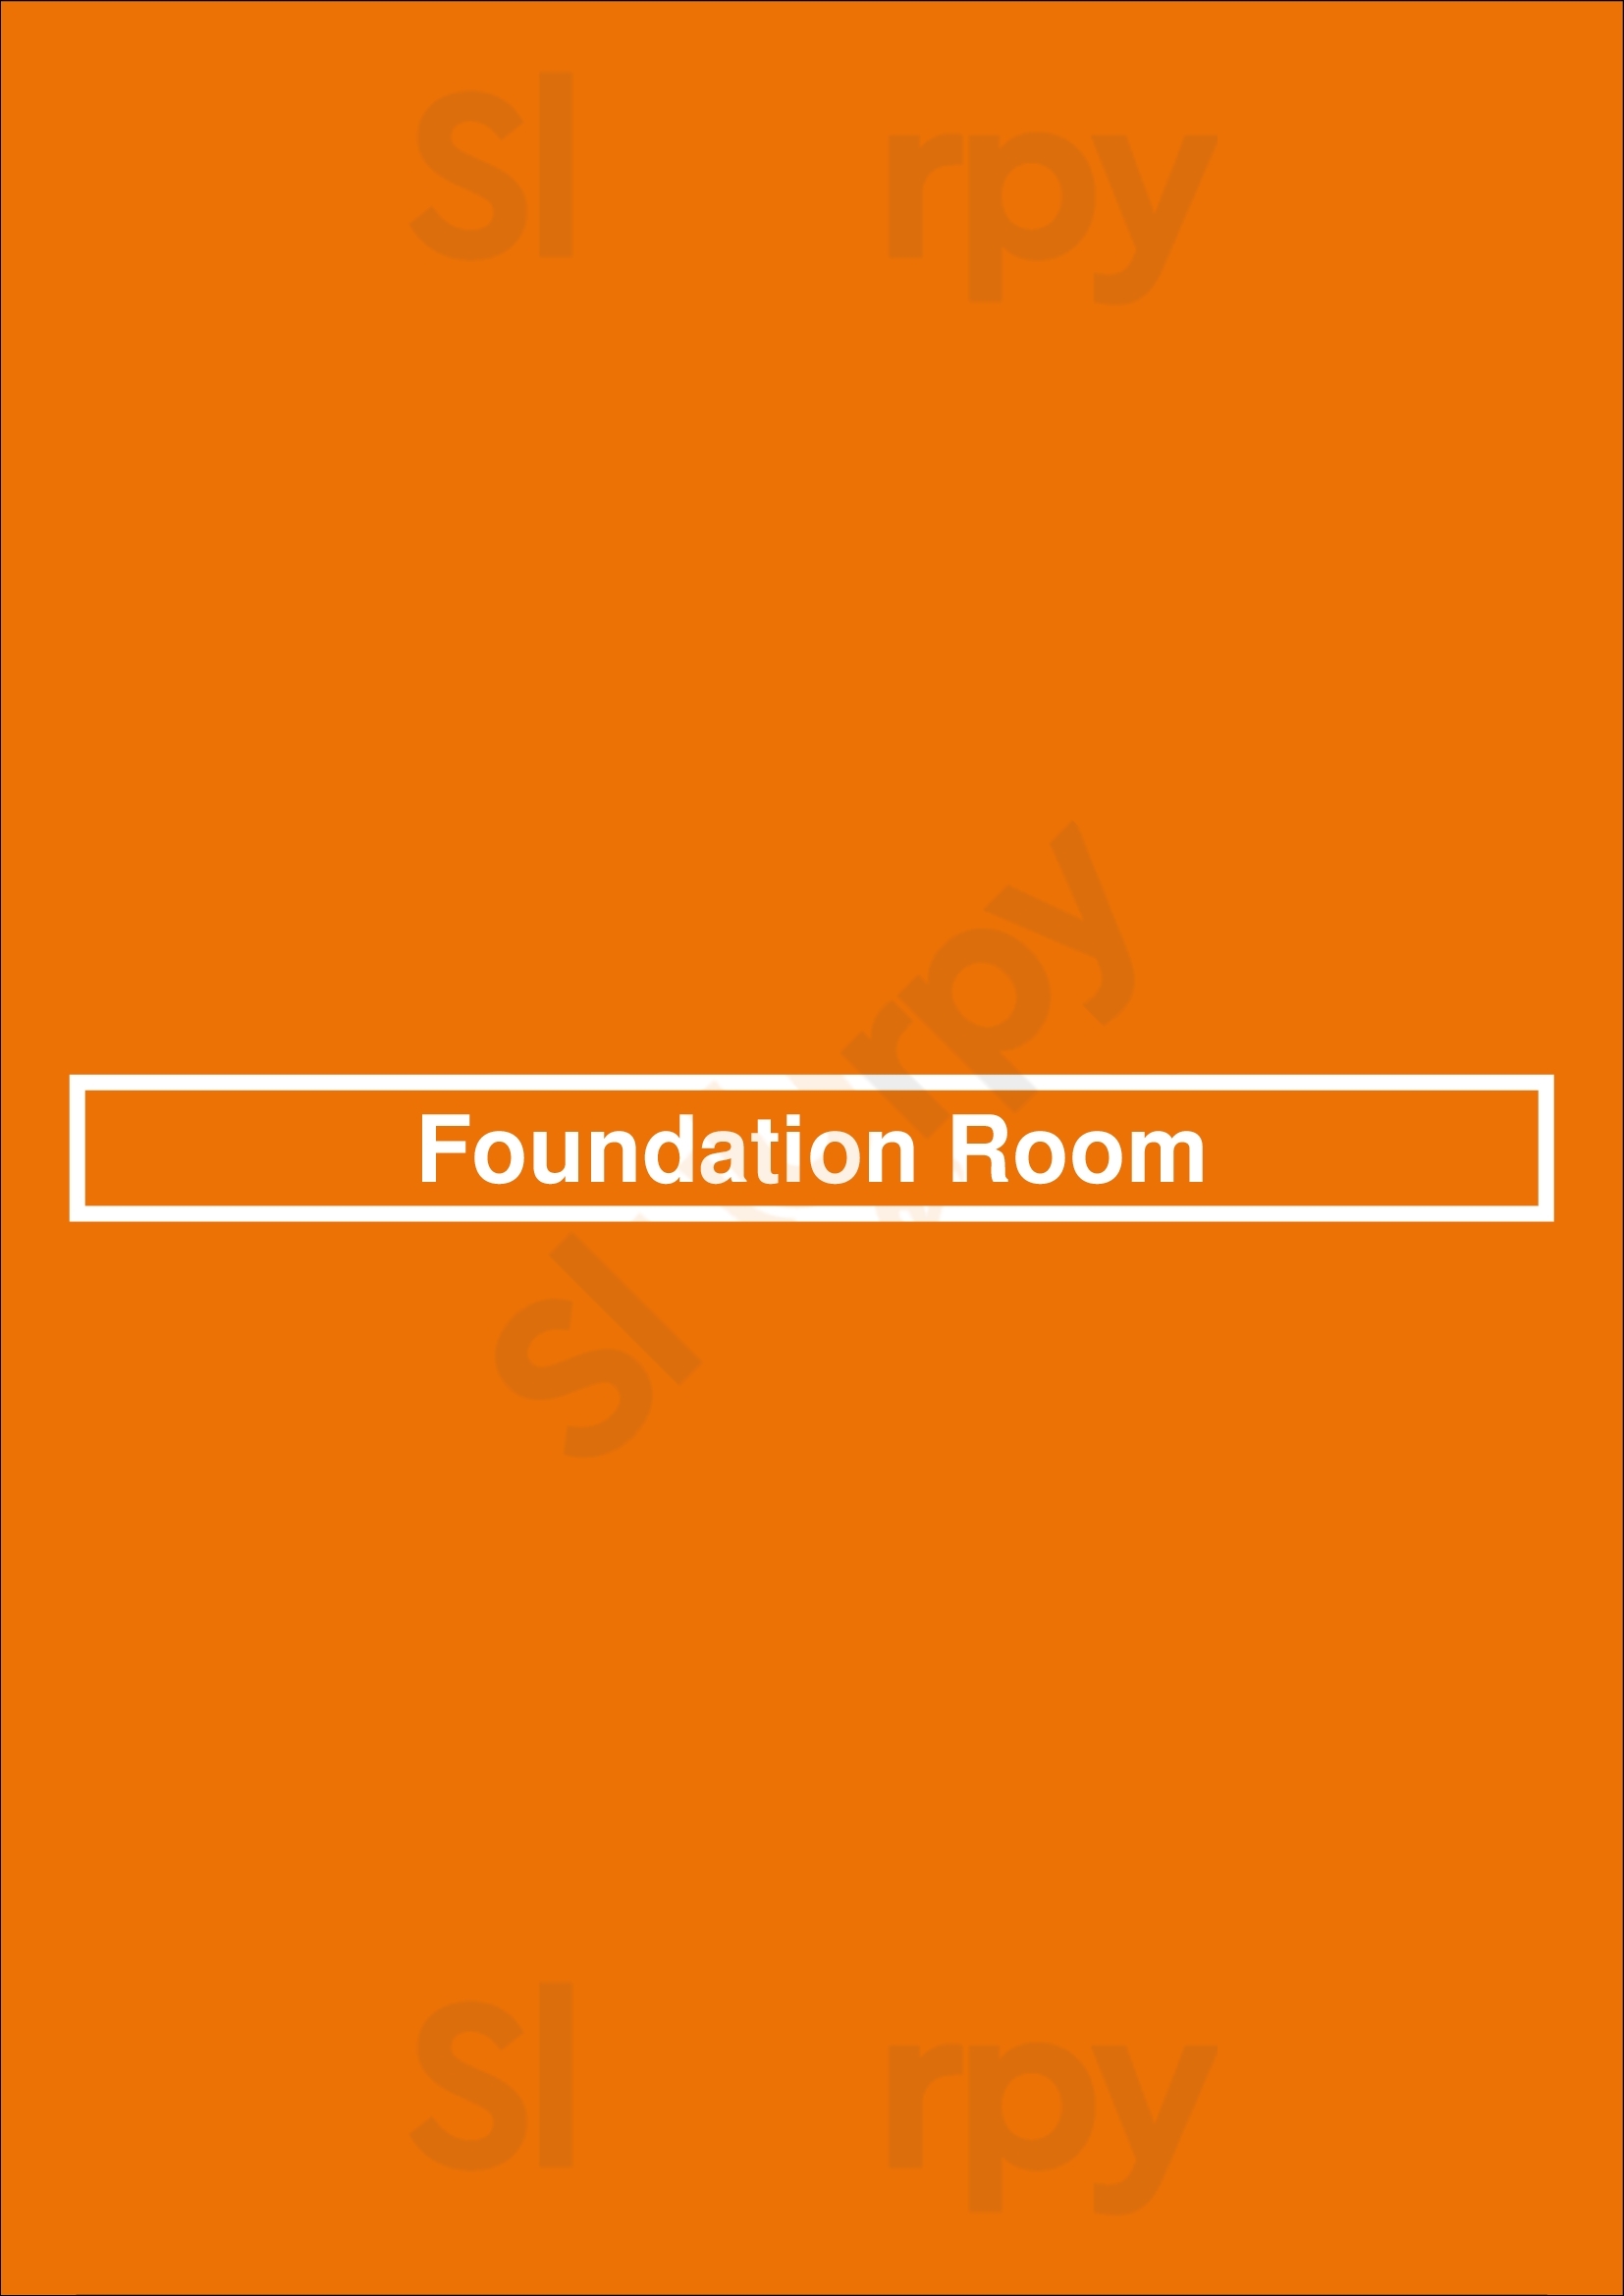 Foundation Room Las Vegas Las Vegas Menu - 1